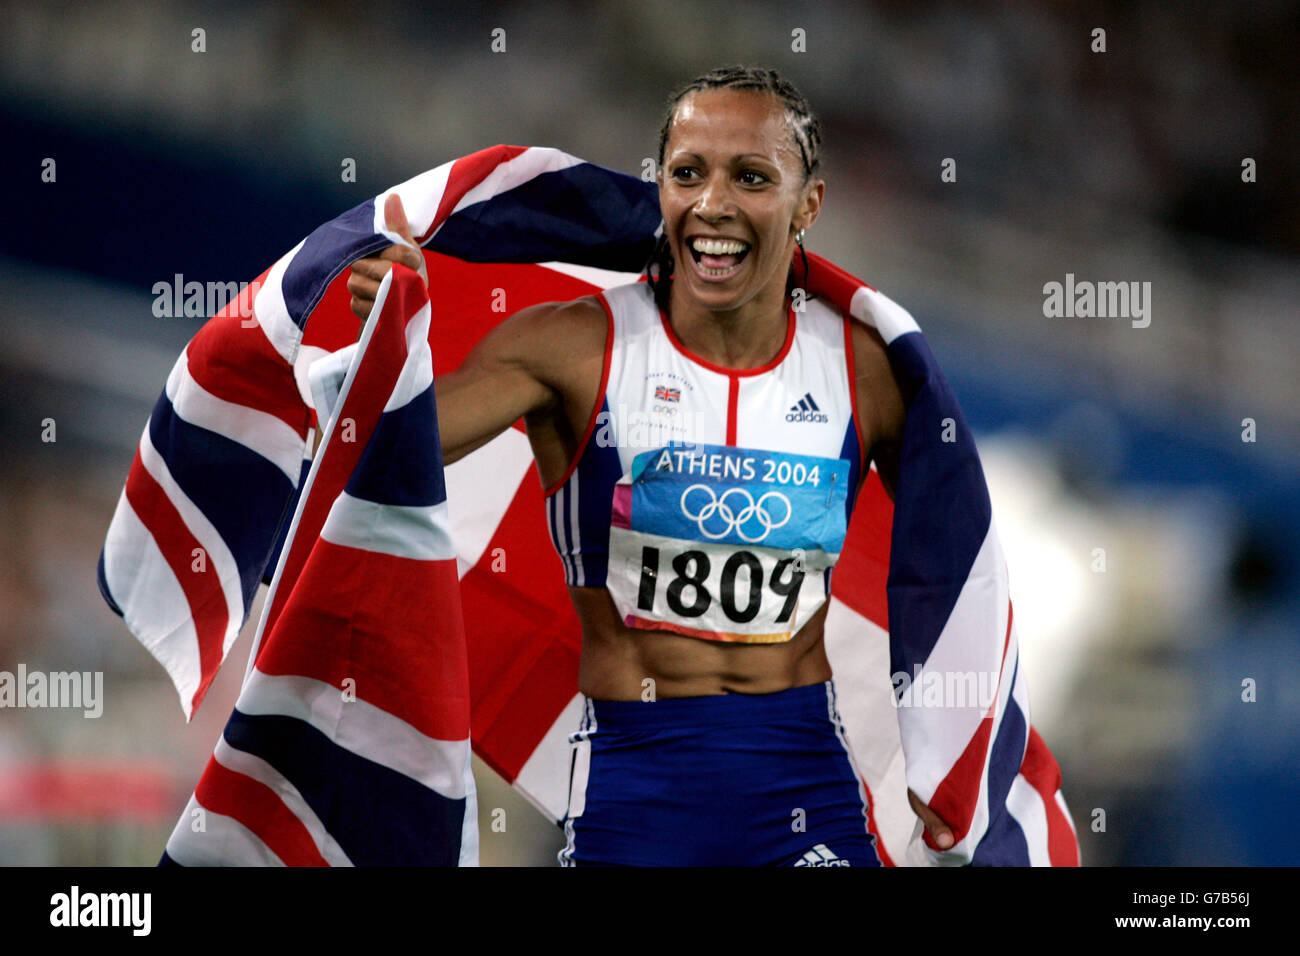 OLYMPICS Athletics 1500M FINAL Stock Photo